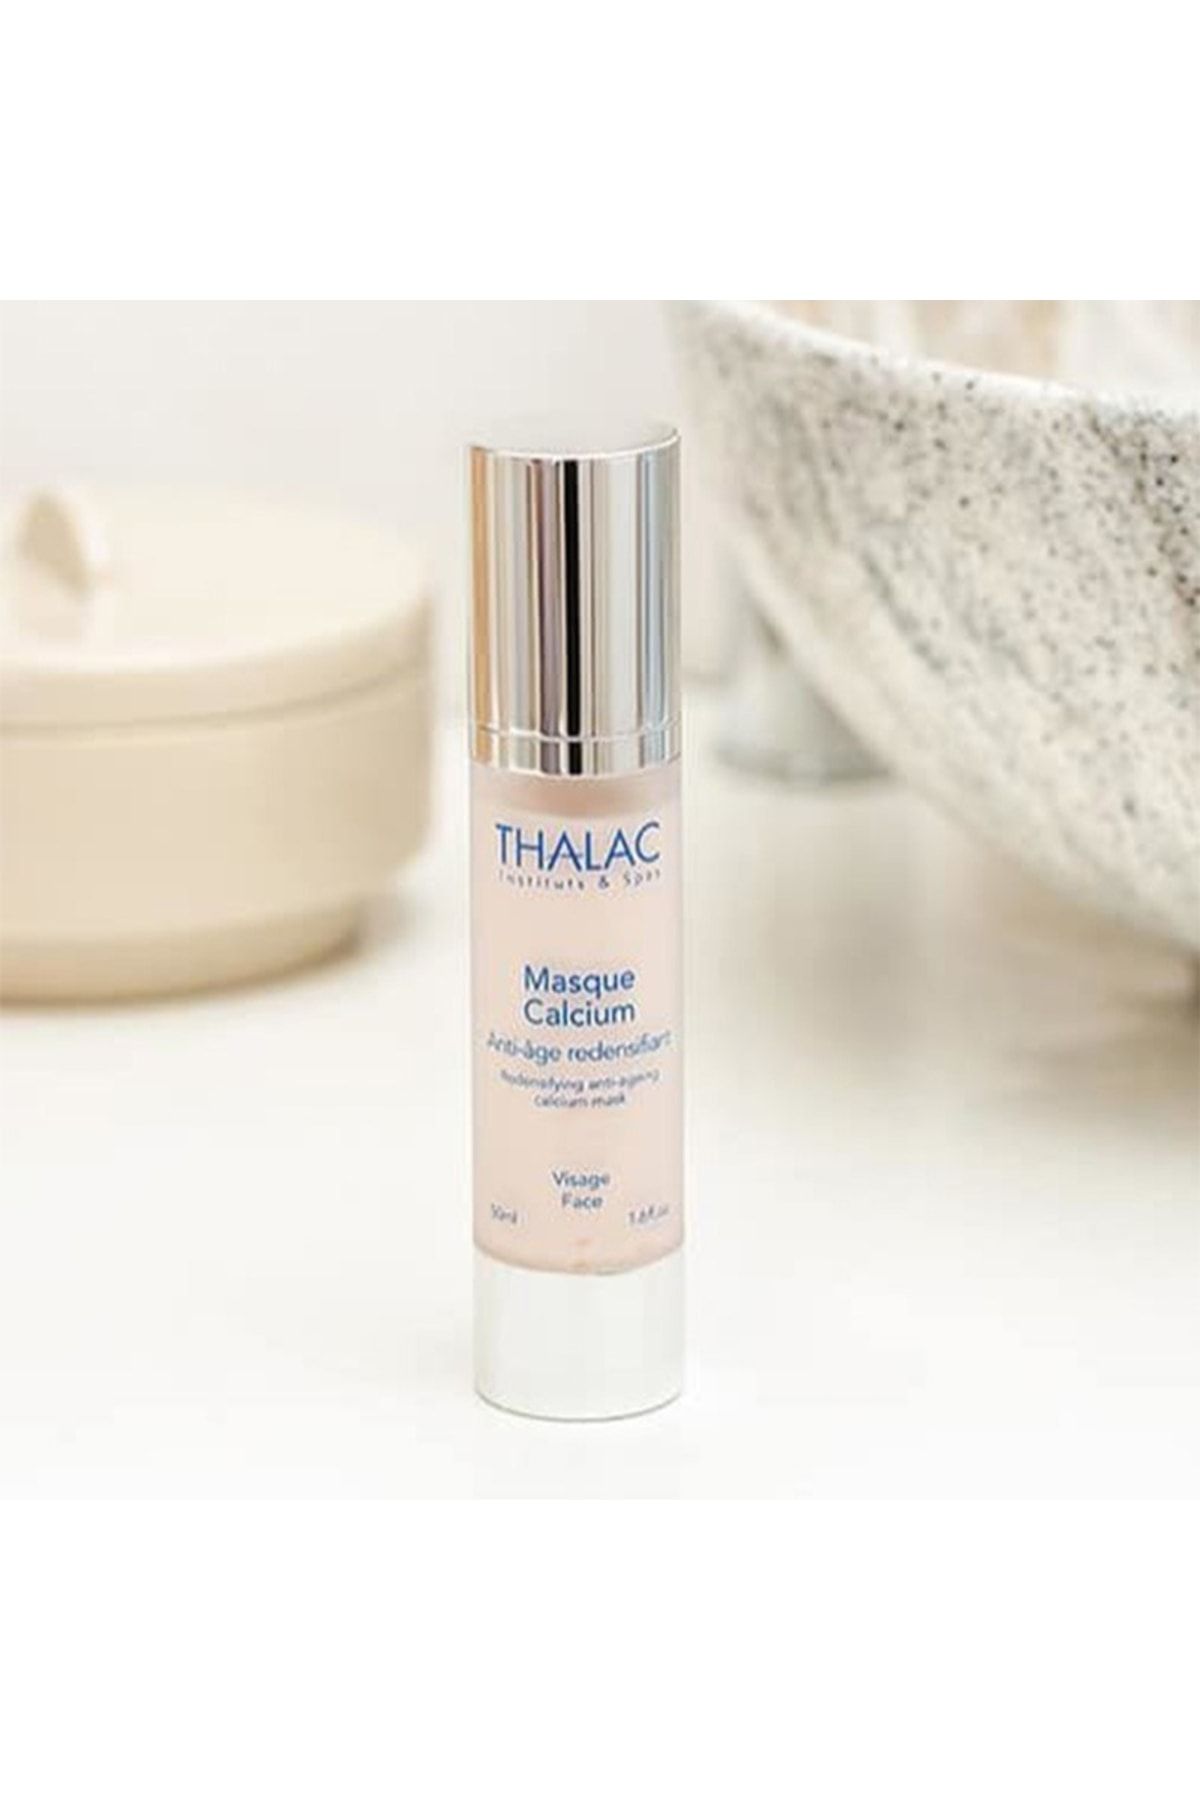 THALAC Masque Calcium Anti Age Redensifiant - Yaşlanma Karşıtı Kalsiyum Maske